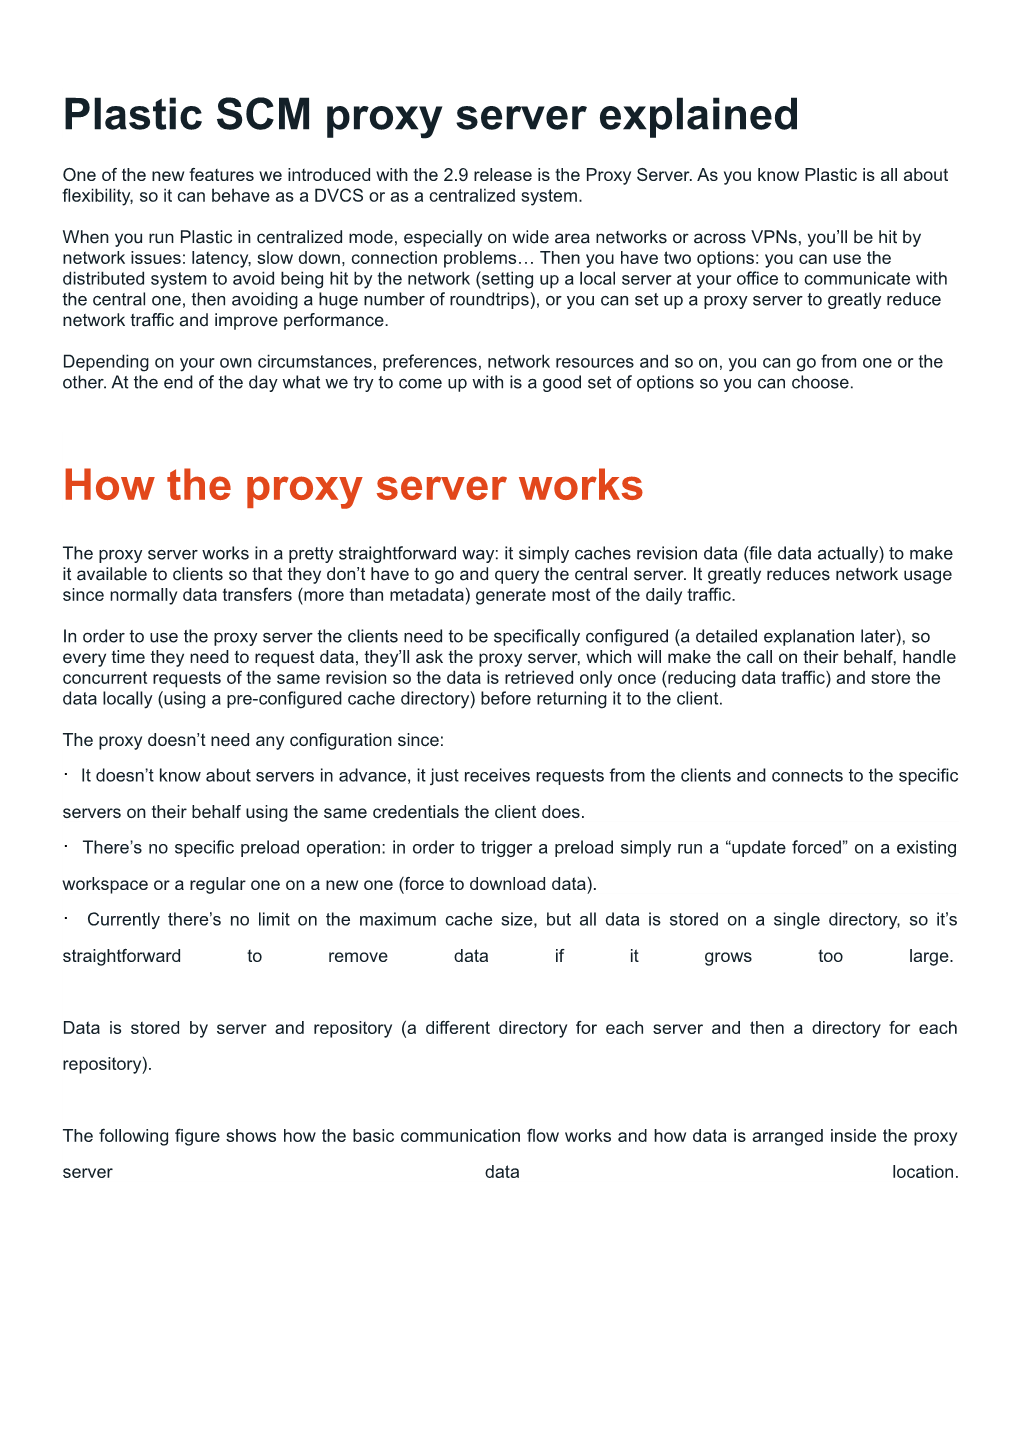 Plastic SCM Proxy Server Explained